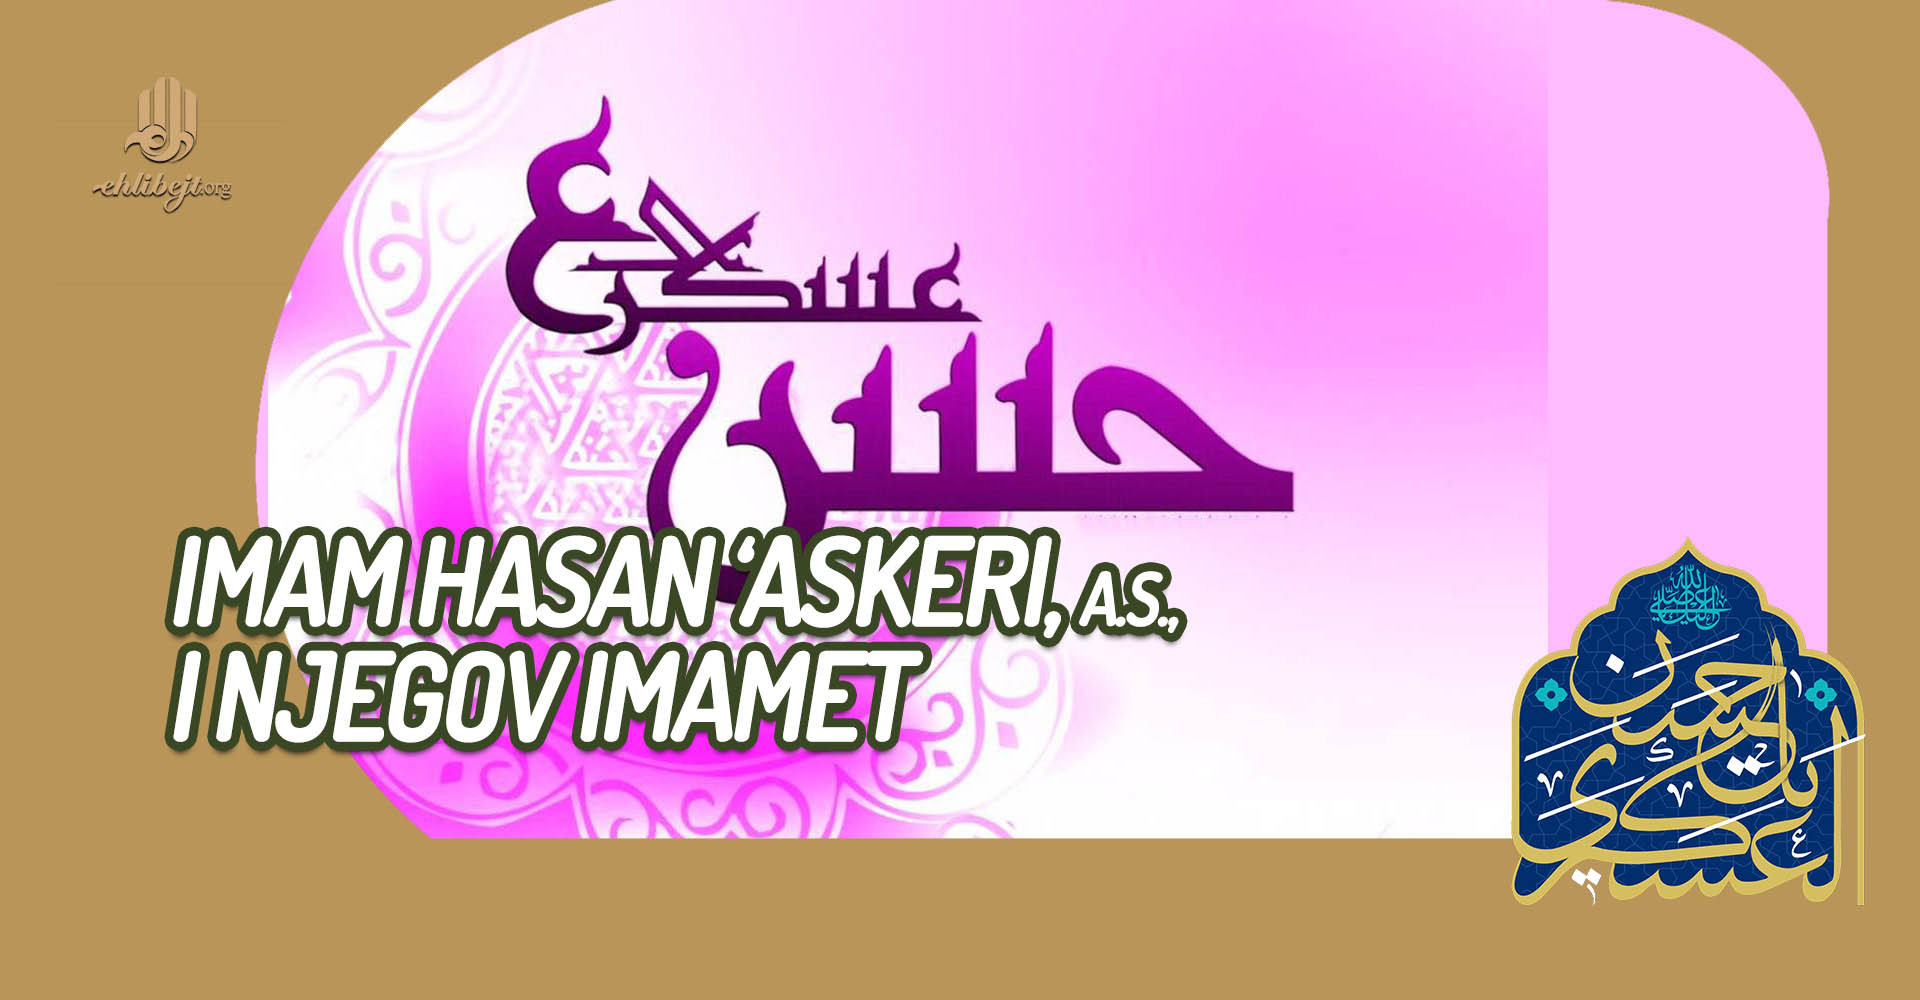 Imam Hasan 'Askeri, a.s., i njegov imamet